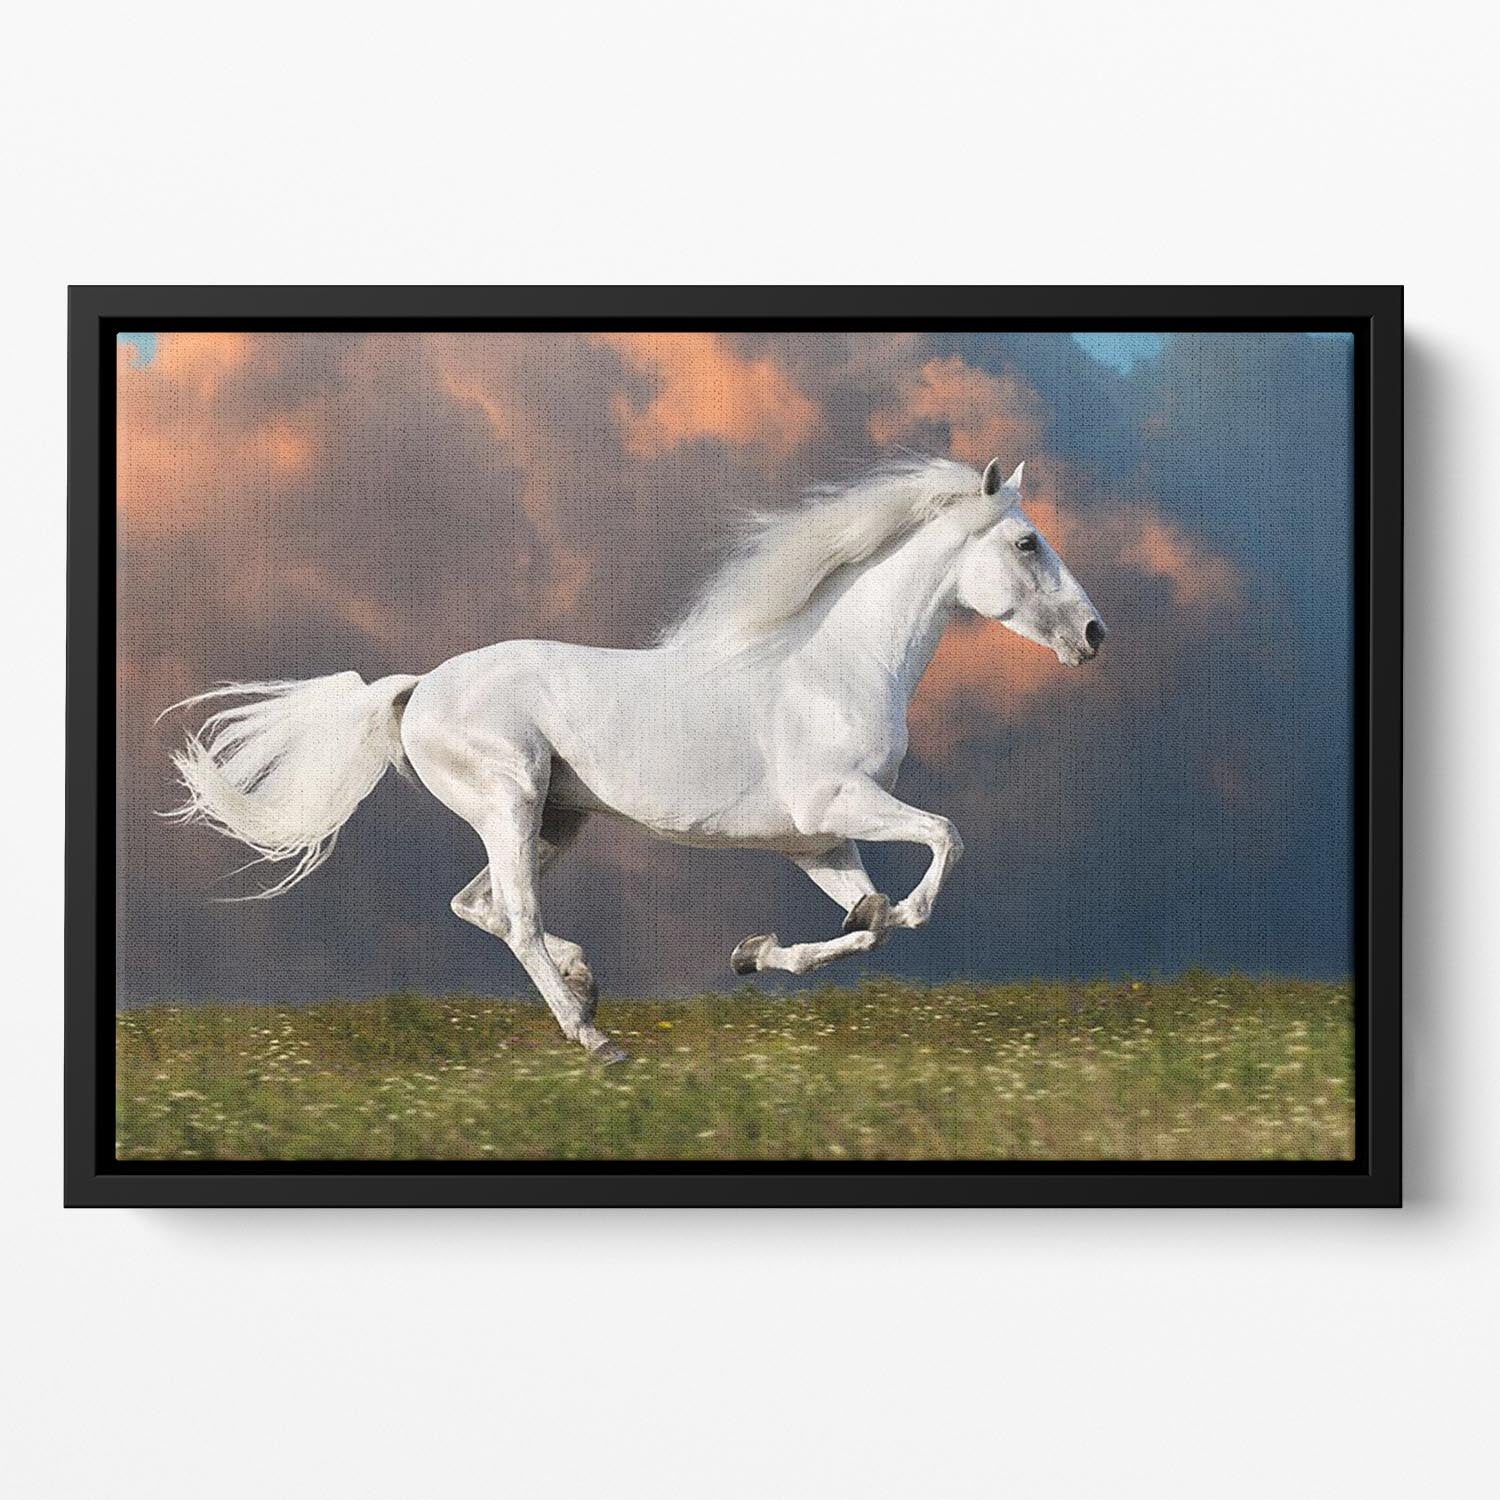 White horse runs gallop on the dark sky Floating Framed Canvas - Canvas Art Rocks - 2